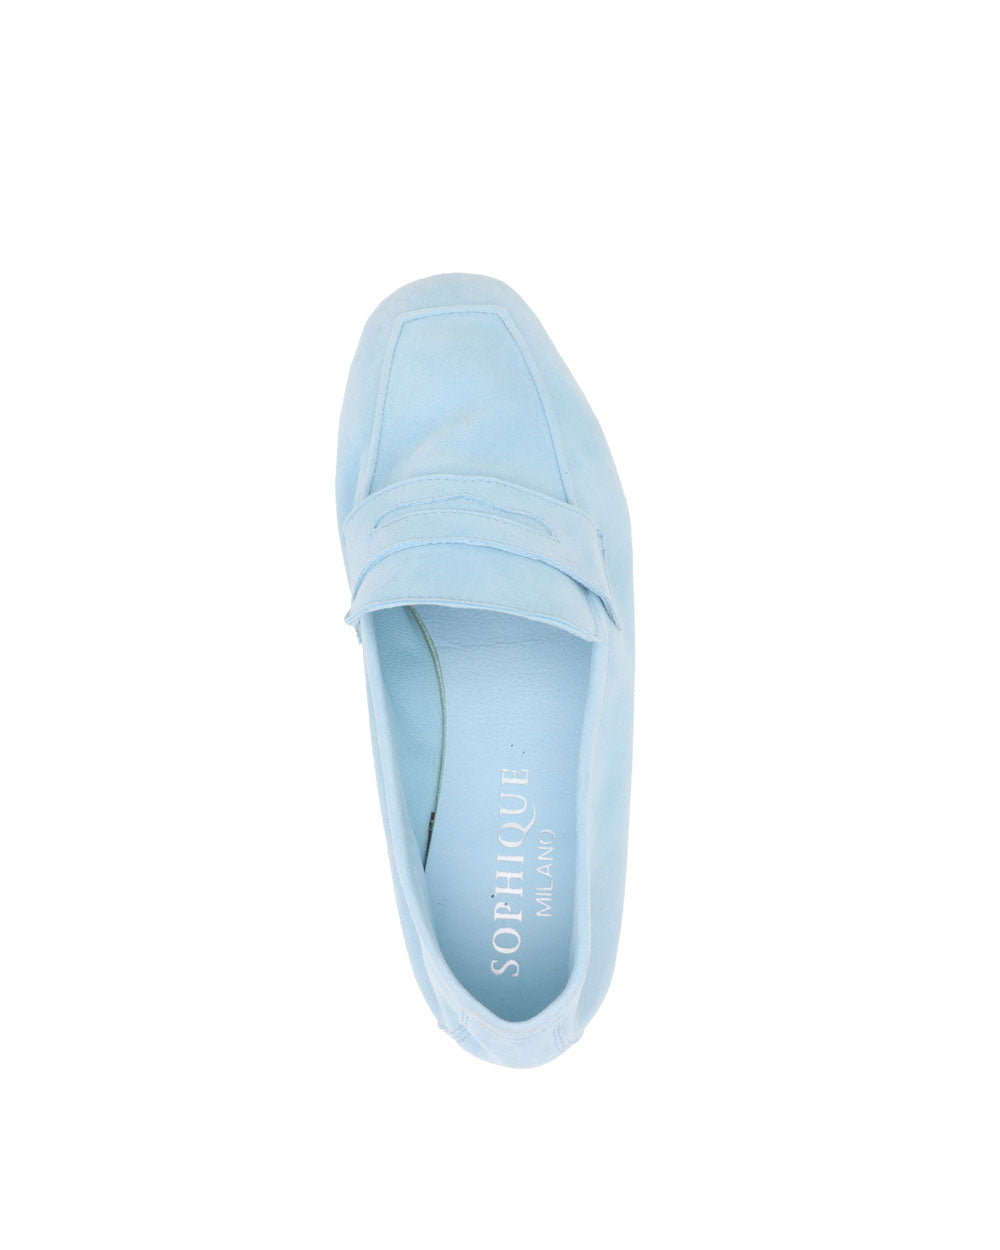 Sophique Milano Essenziale Loafer in Baby Blue – Stanley Korshak